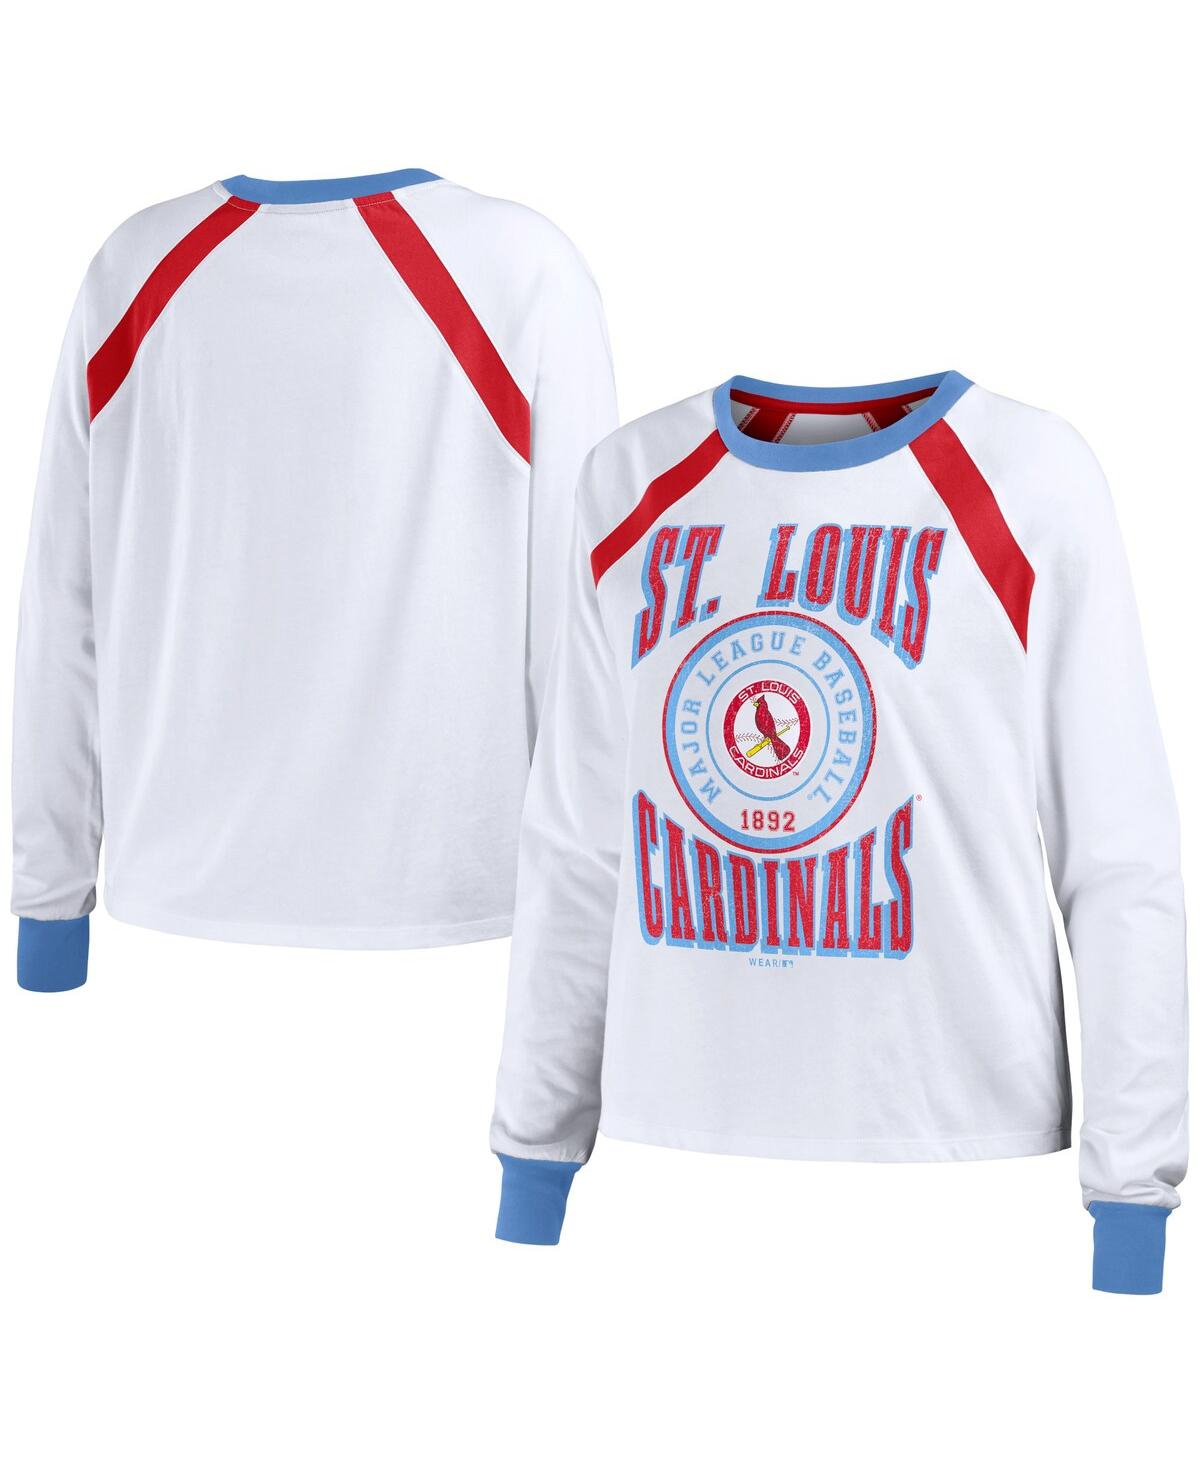 Shop Wear By Erin Andrews Women's  White Distressed St. Louis Cardinals Raglan Long Sleeve T-shirt